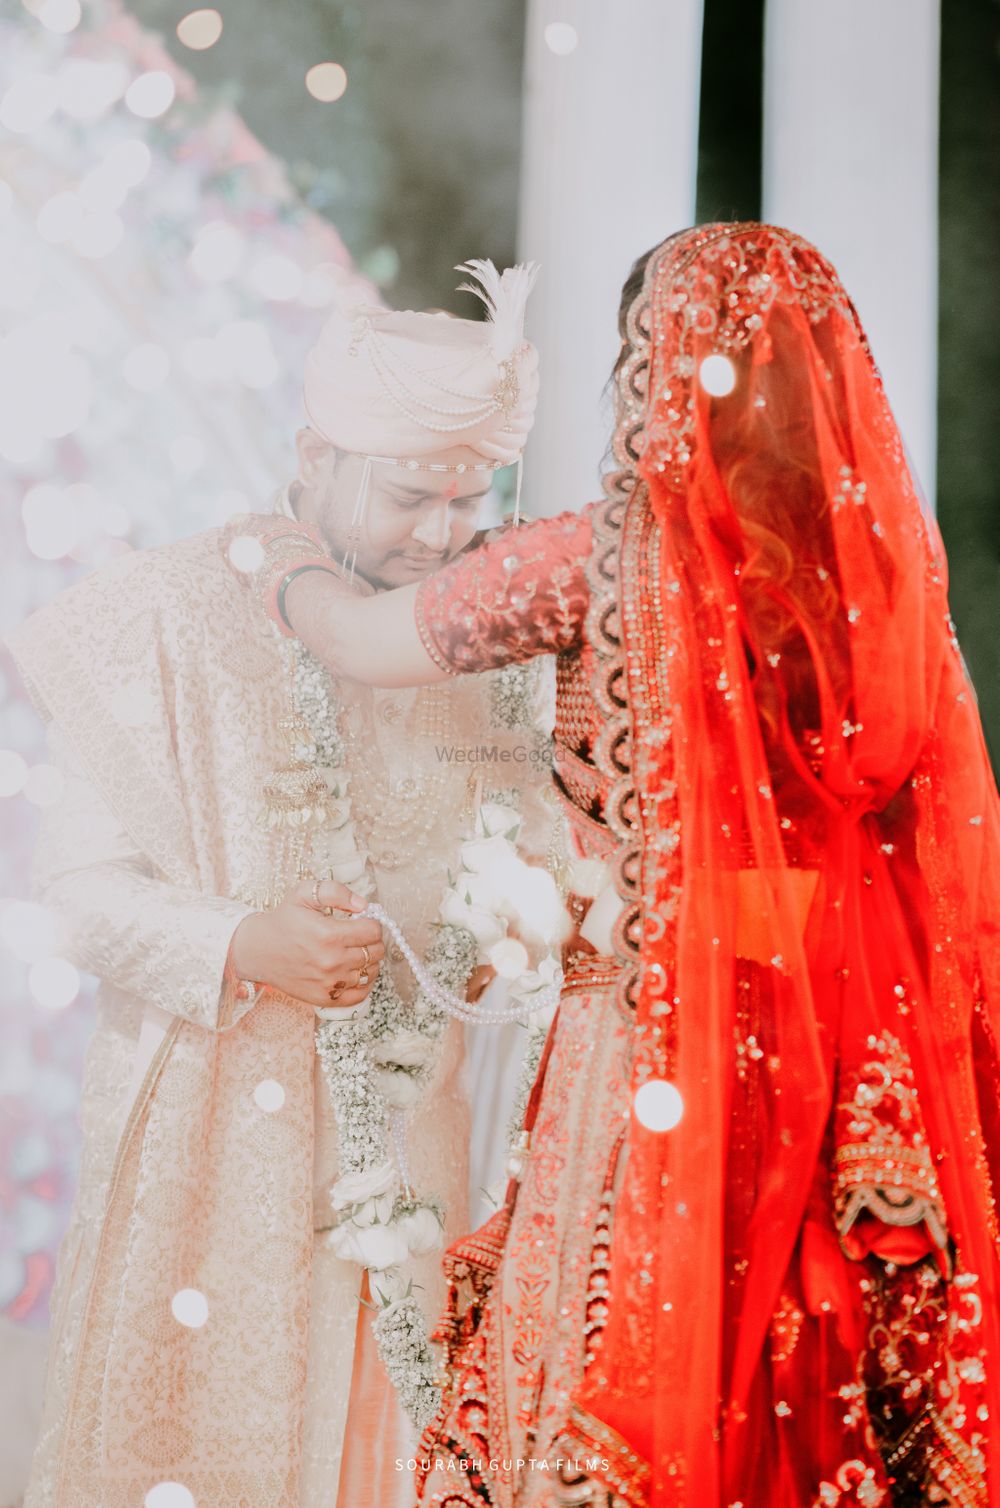 Photo From weddings works - By Sourabh Gupta Films